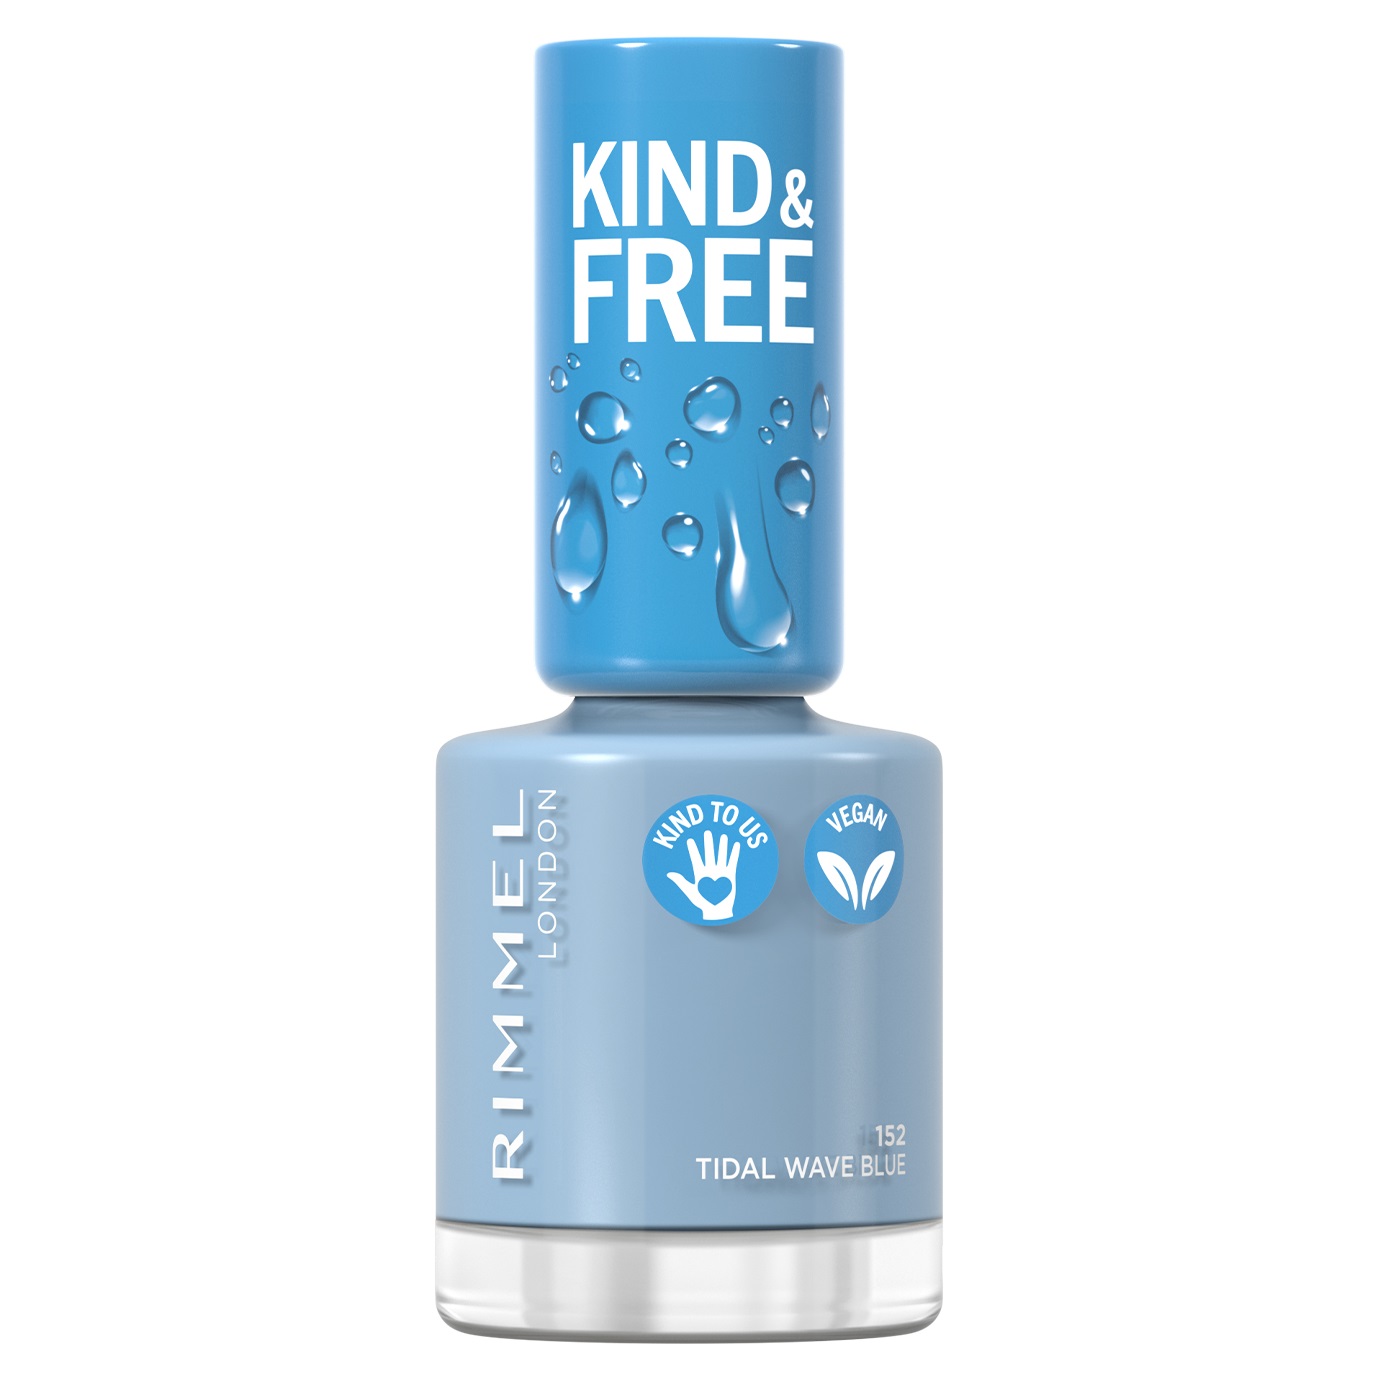 Лак для ногтей Rimmel Kind&Free, тон 152 (Tidal Wave Blue), 8 мл (8000019959396) - фото 1